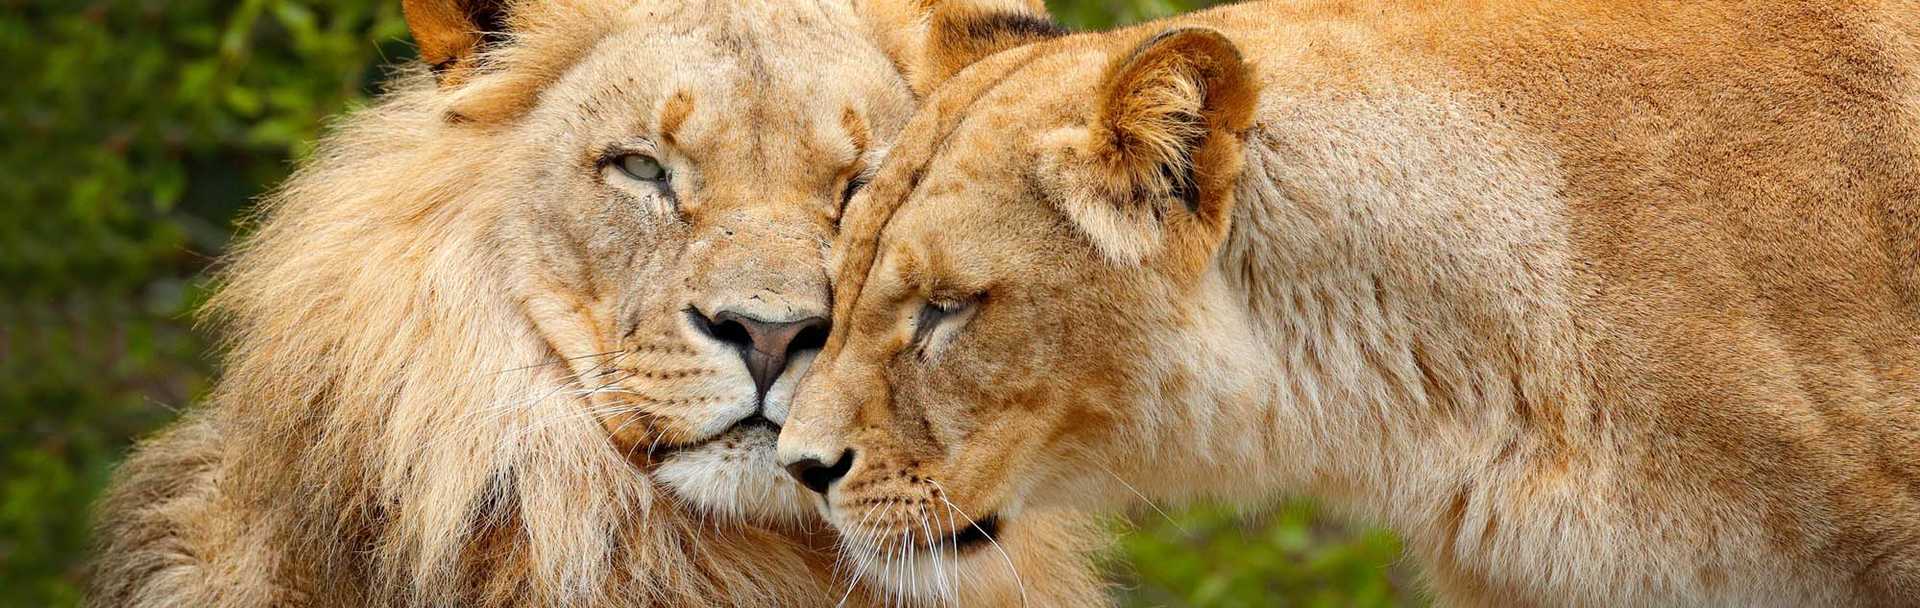 Pair of lions nuzzling in Chobe National Park, Bostwana